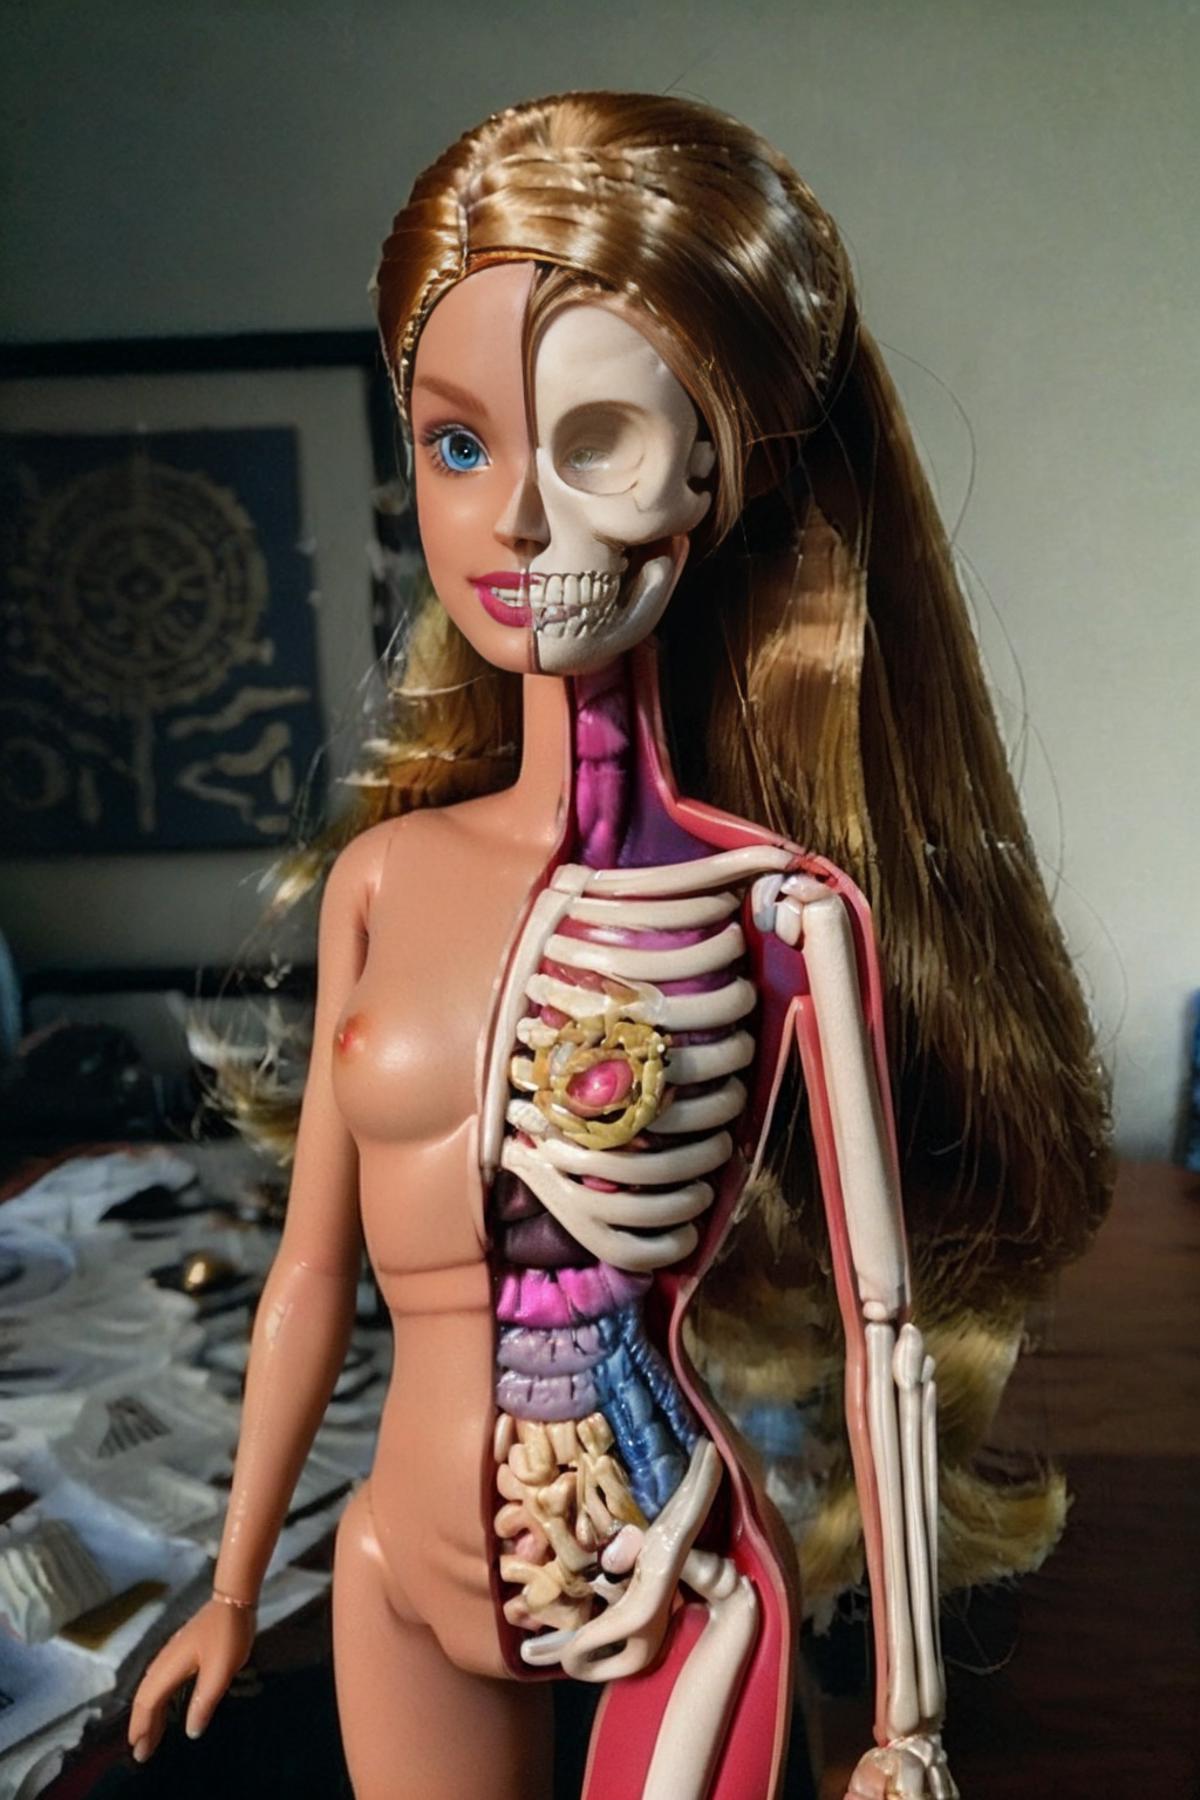 Skeleton Toy image